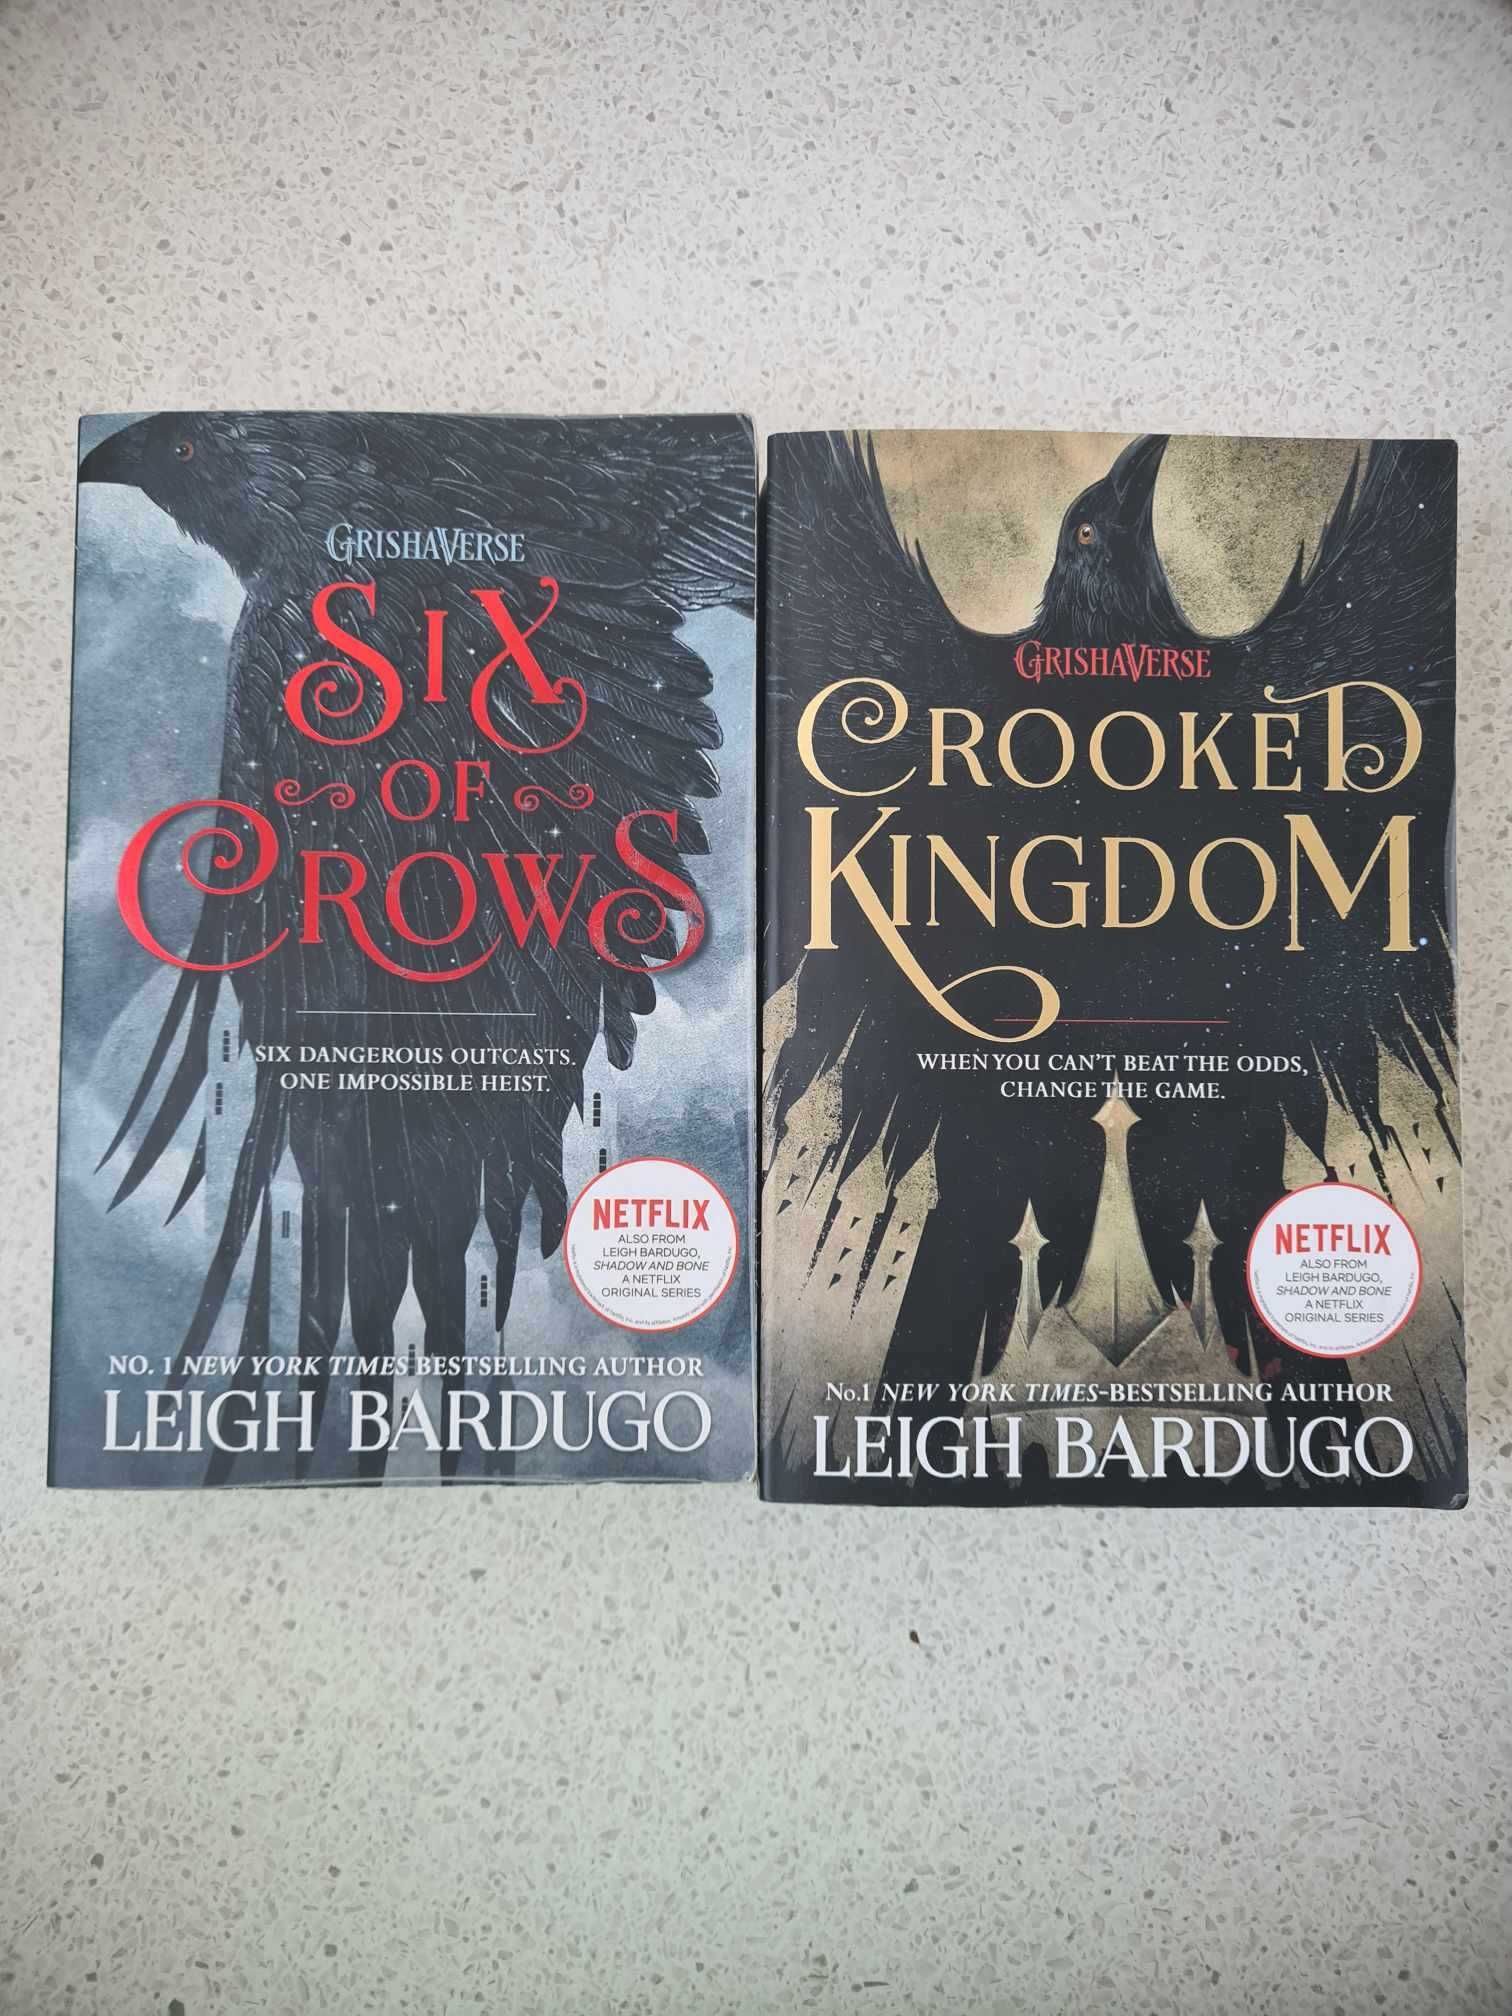 Leigh Bardugo "Six of Crows", "Crooked Kingdom"